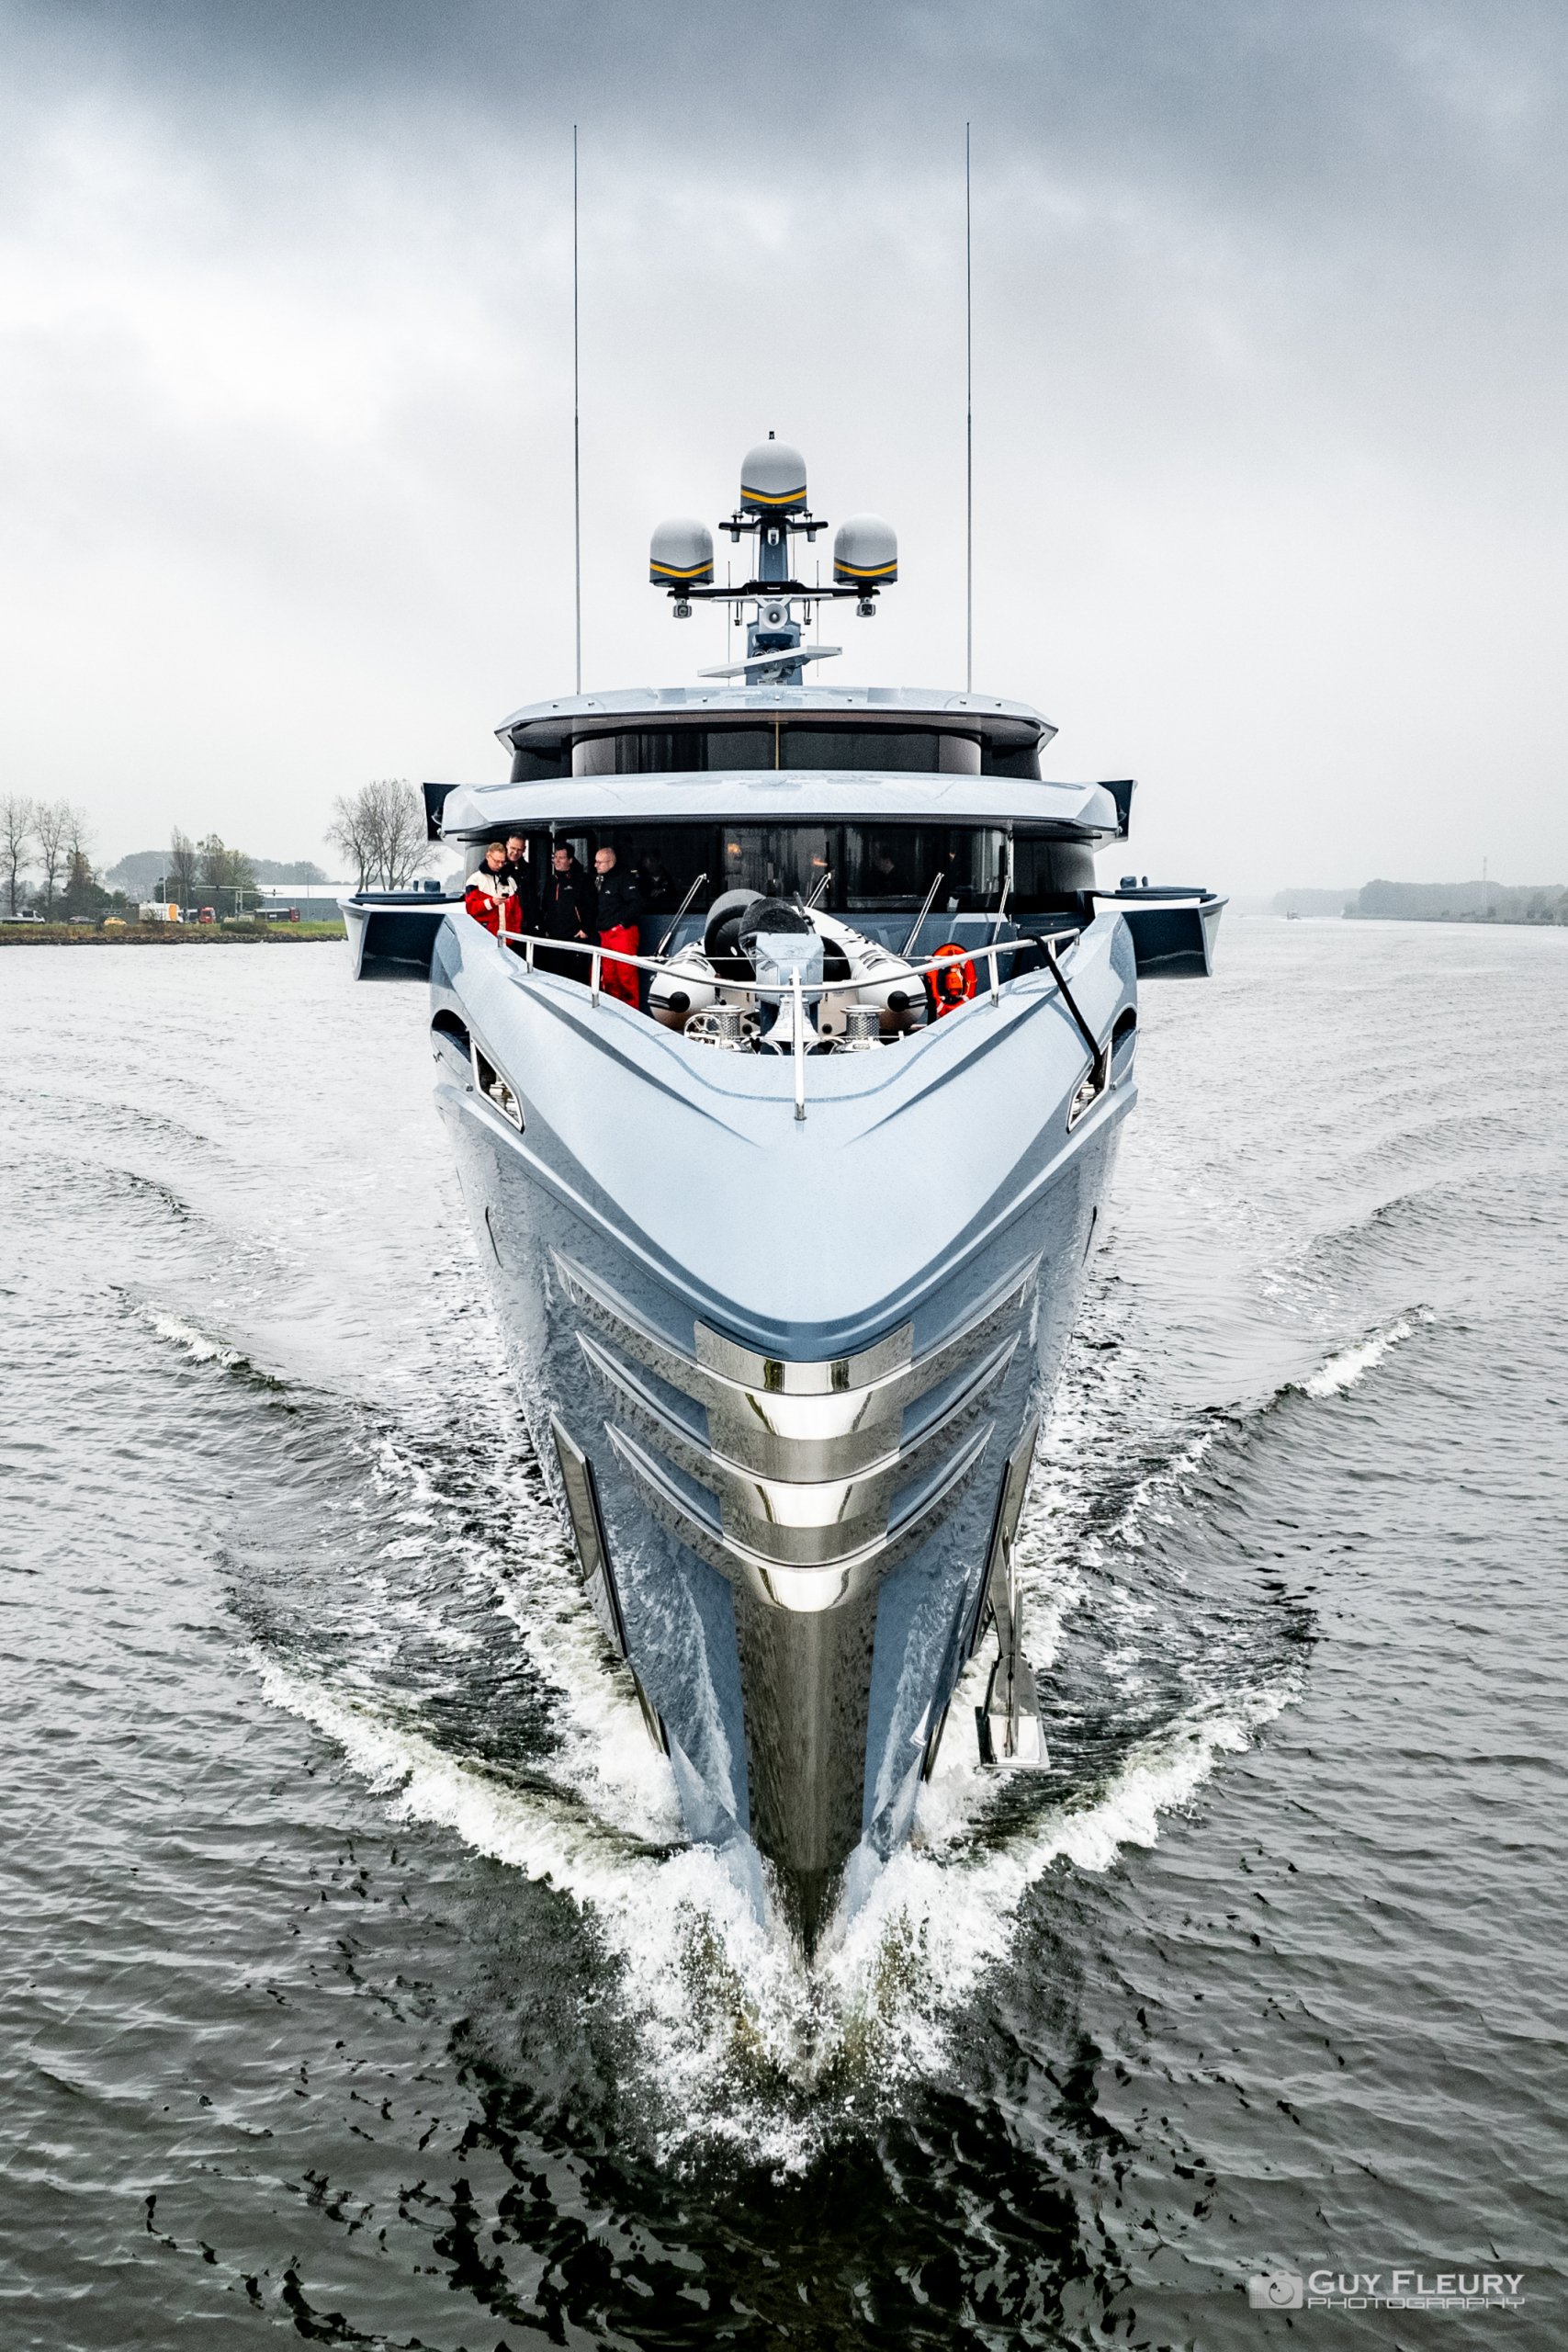 PHI Yacht • Royal Huisman • 2021 • Owner Russian Millionaire